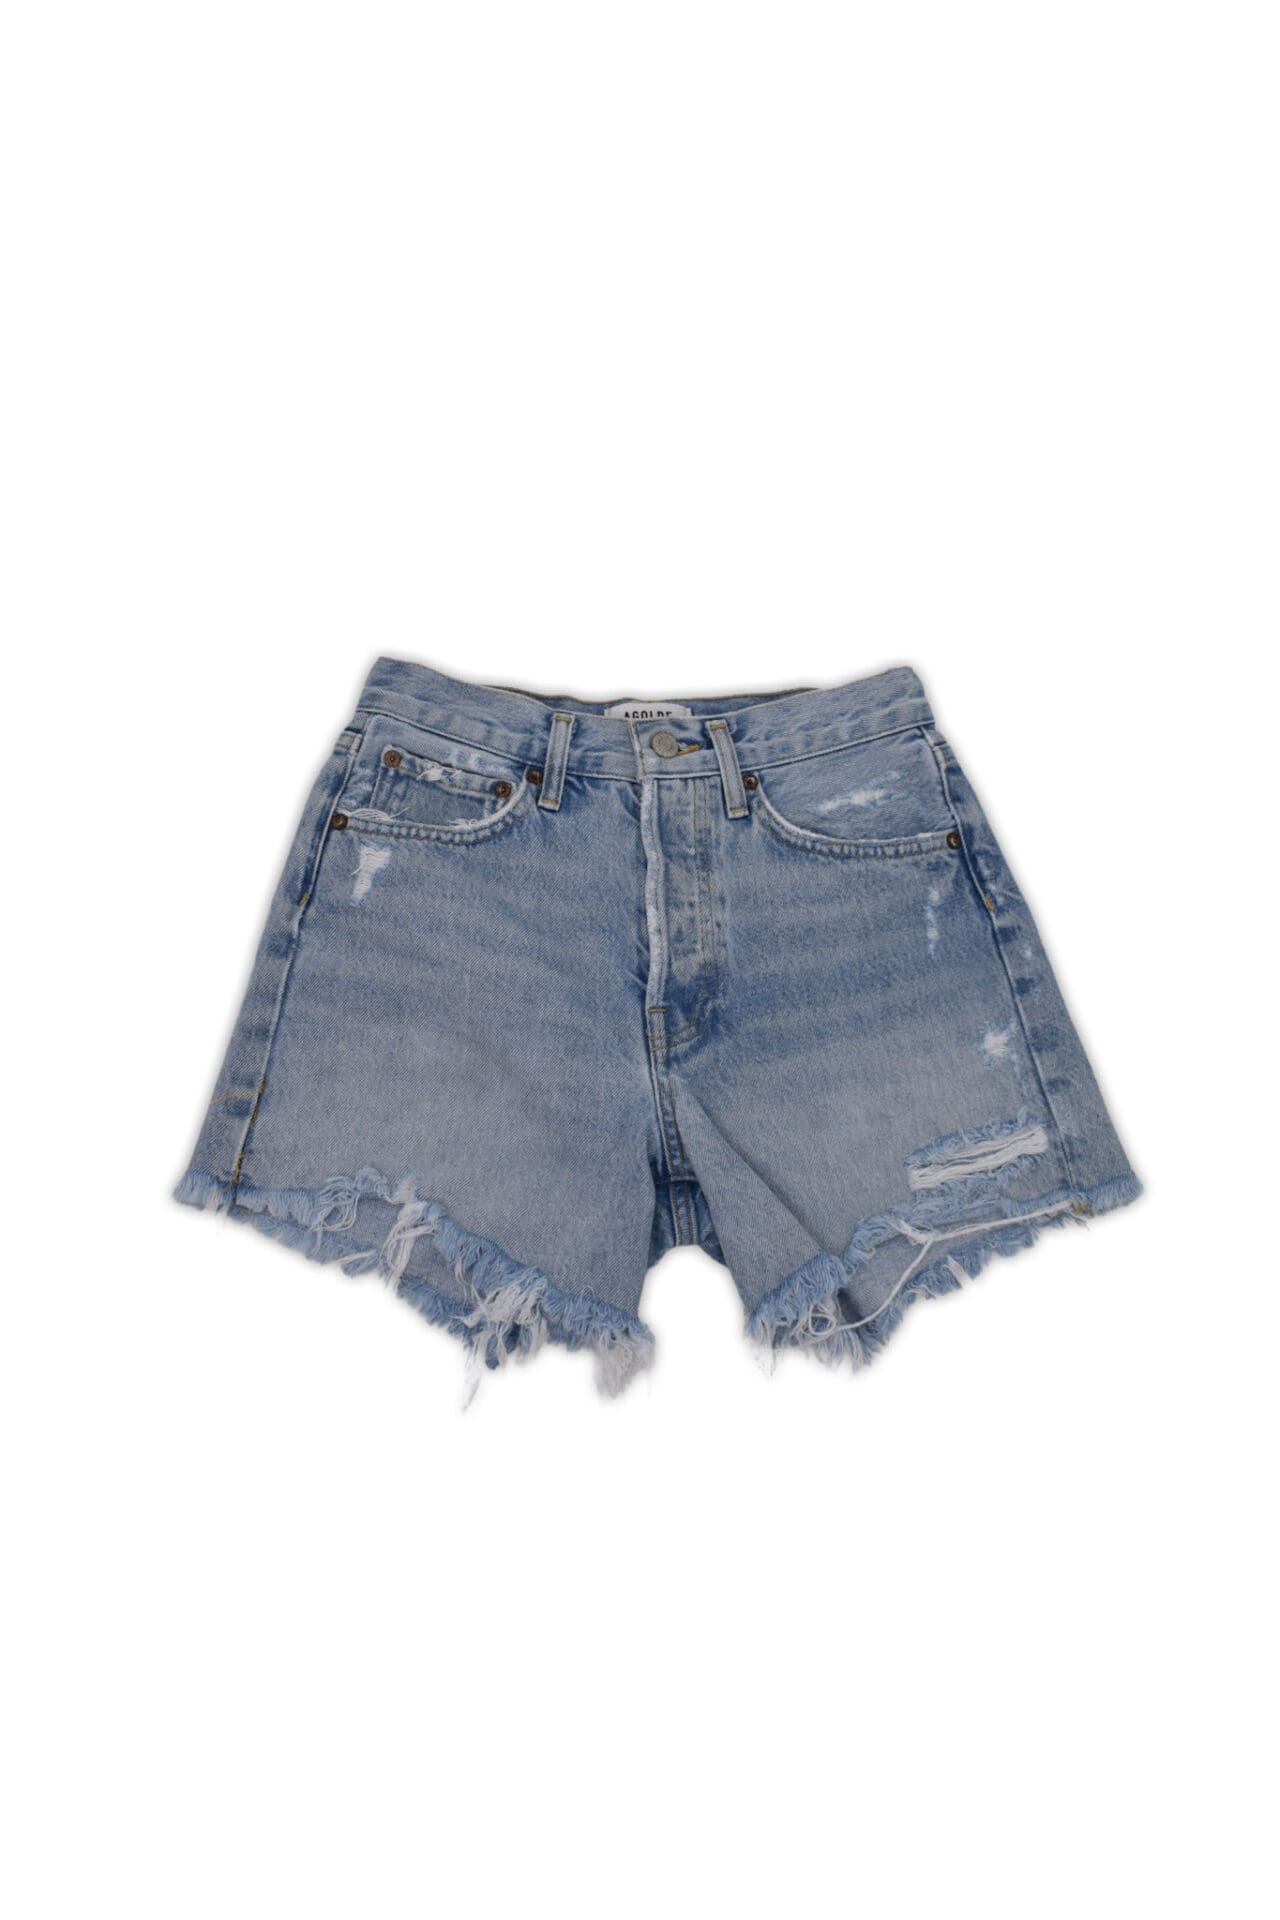 XXS shorts 100% cotton, vintage cut of denim shorts